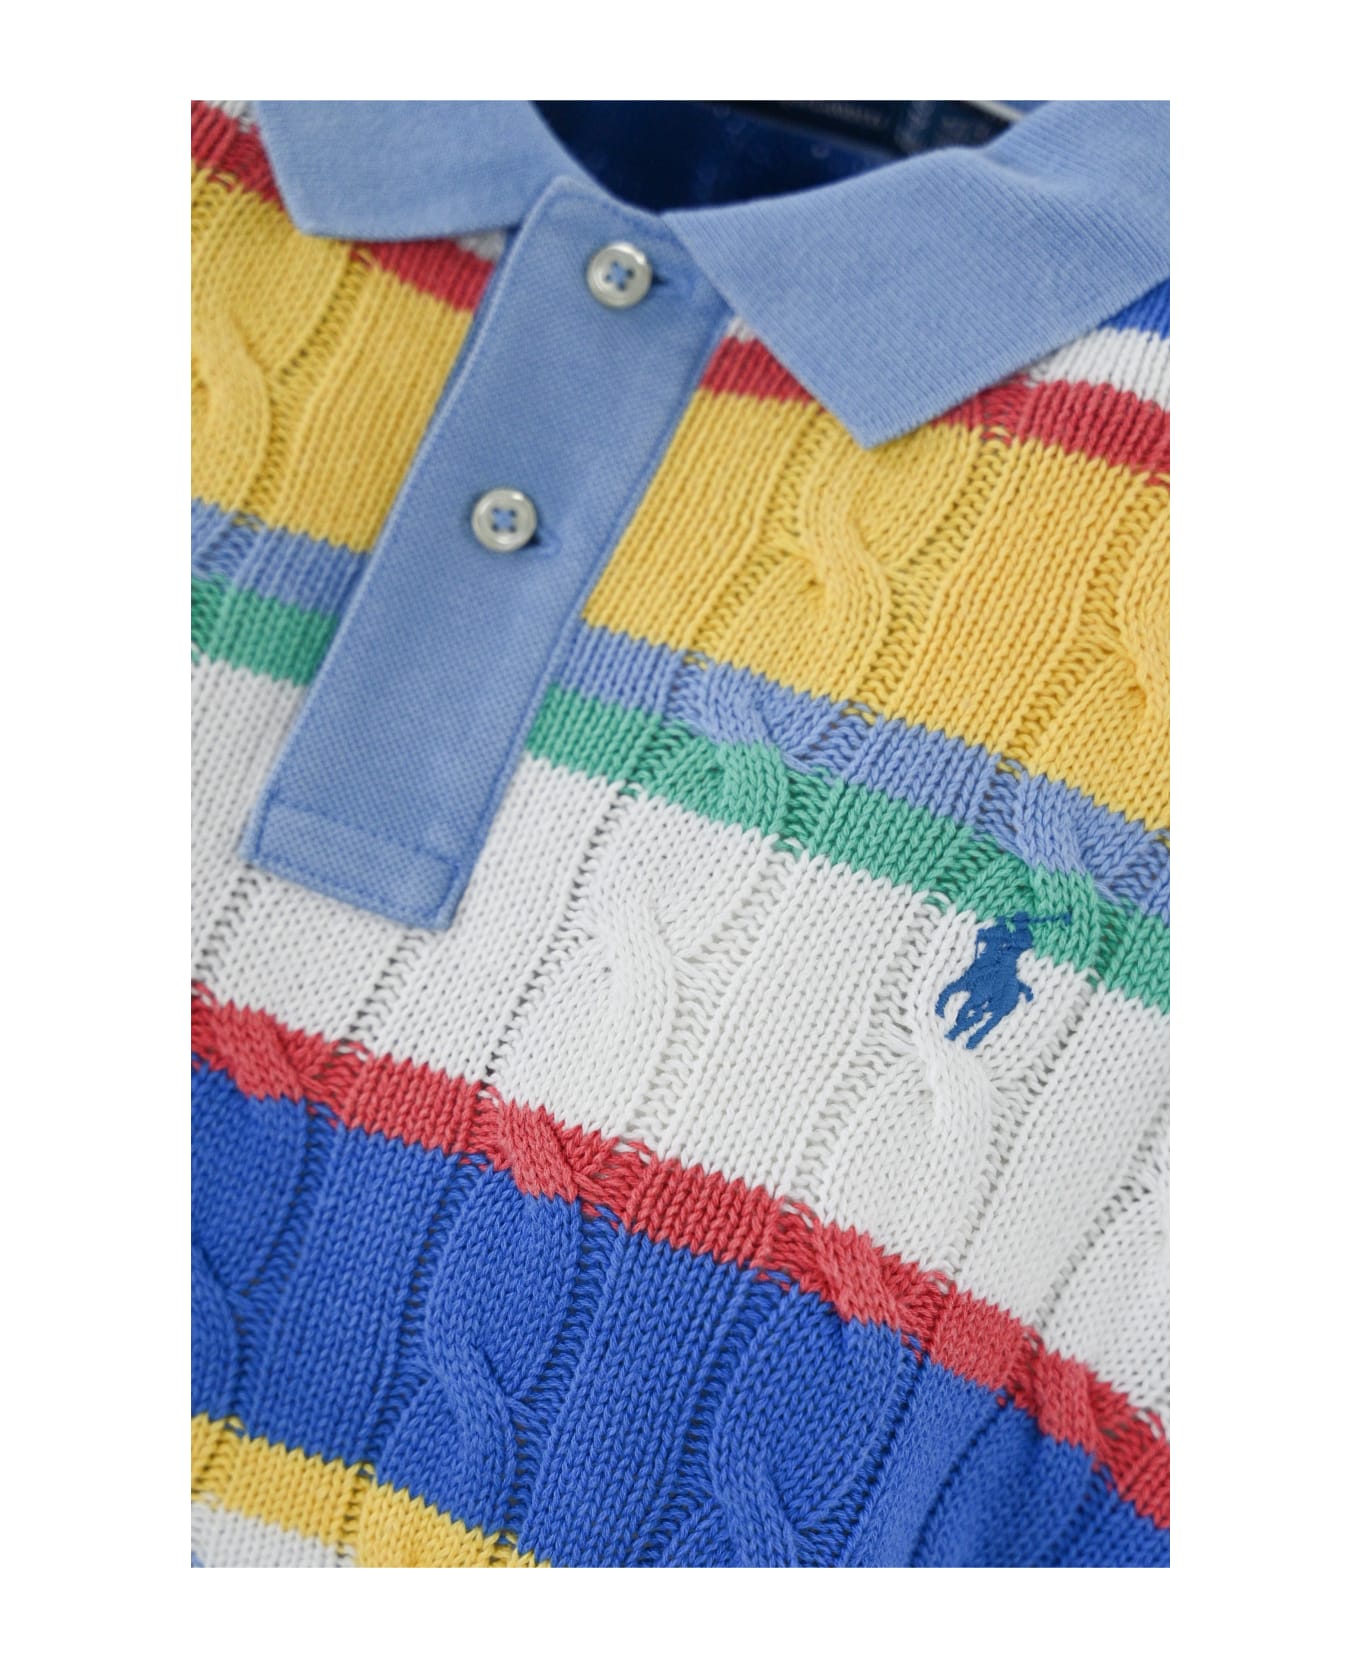 Polo Ralph Lauren Women's Polo Design Shirt - Stripe